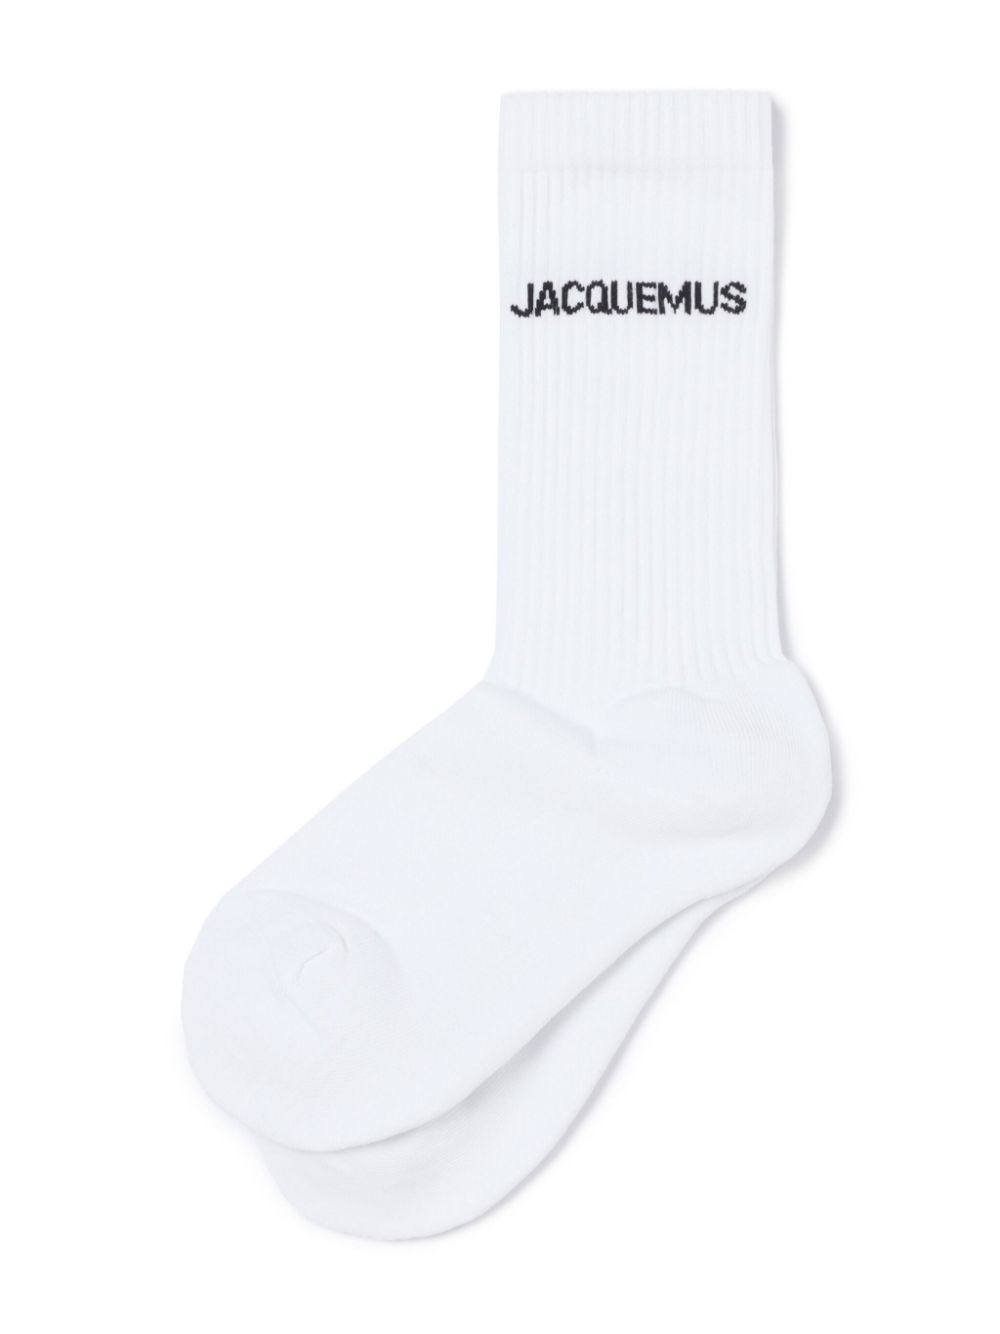 Jacquemus Les Chaussettes ribbed socks - Wit